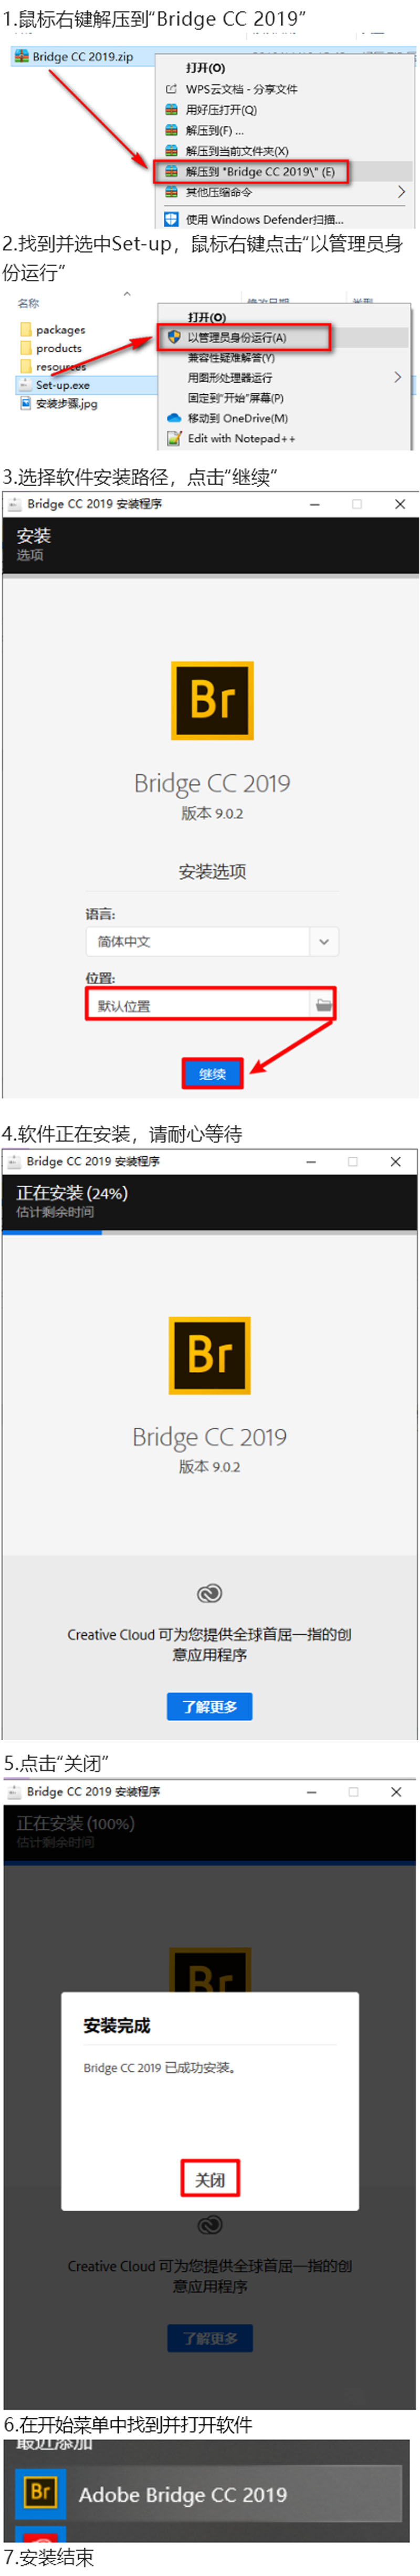 Adobe Bridge 2019װ̳.jpg